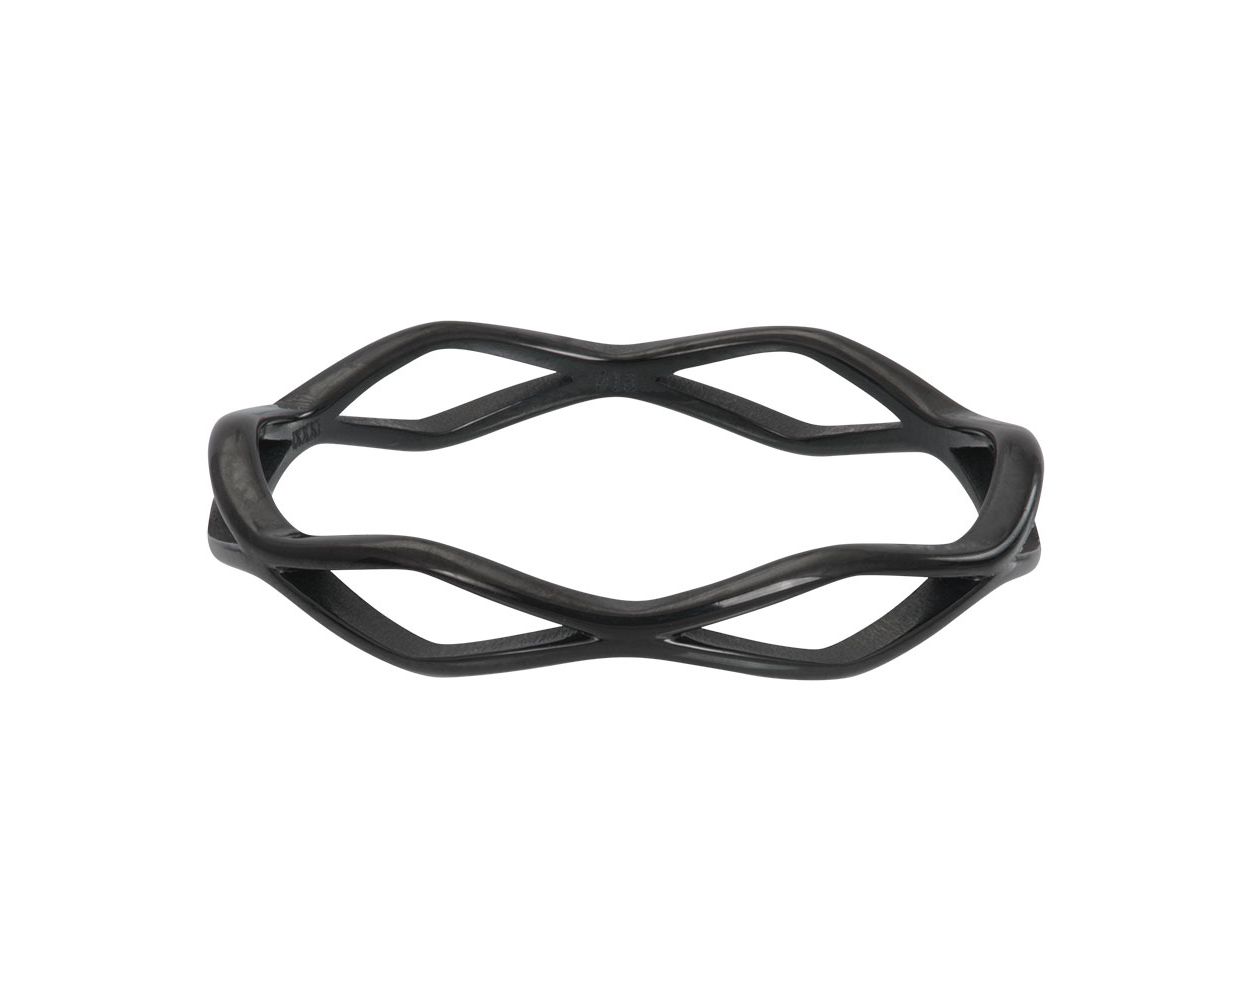 iXXXi Ring Modern Black - R06403